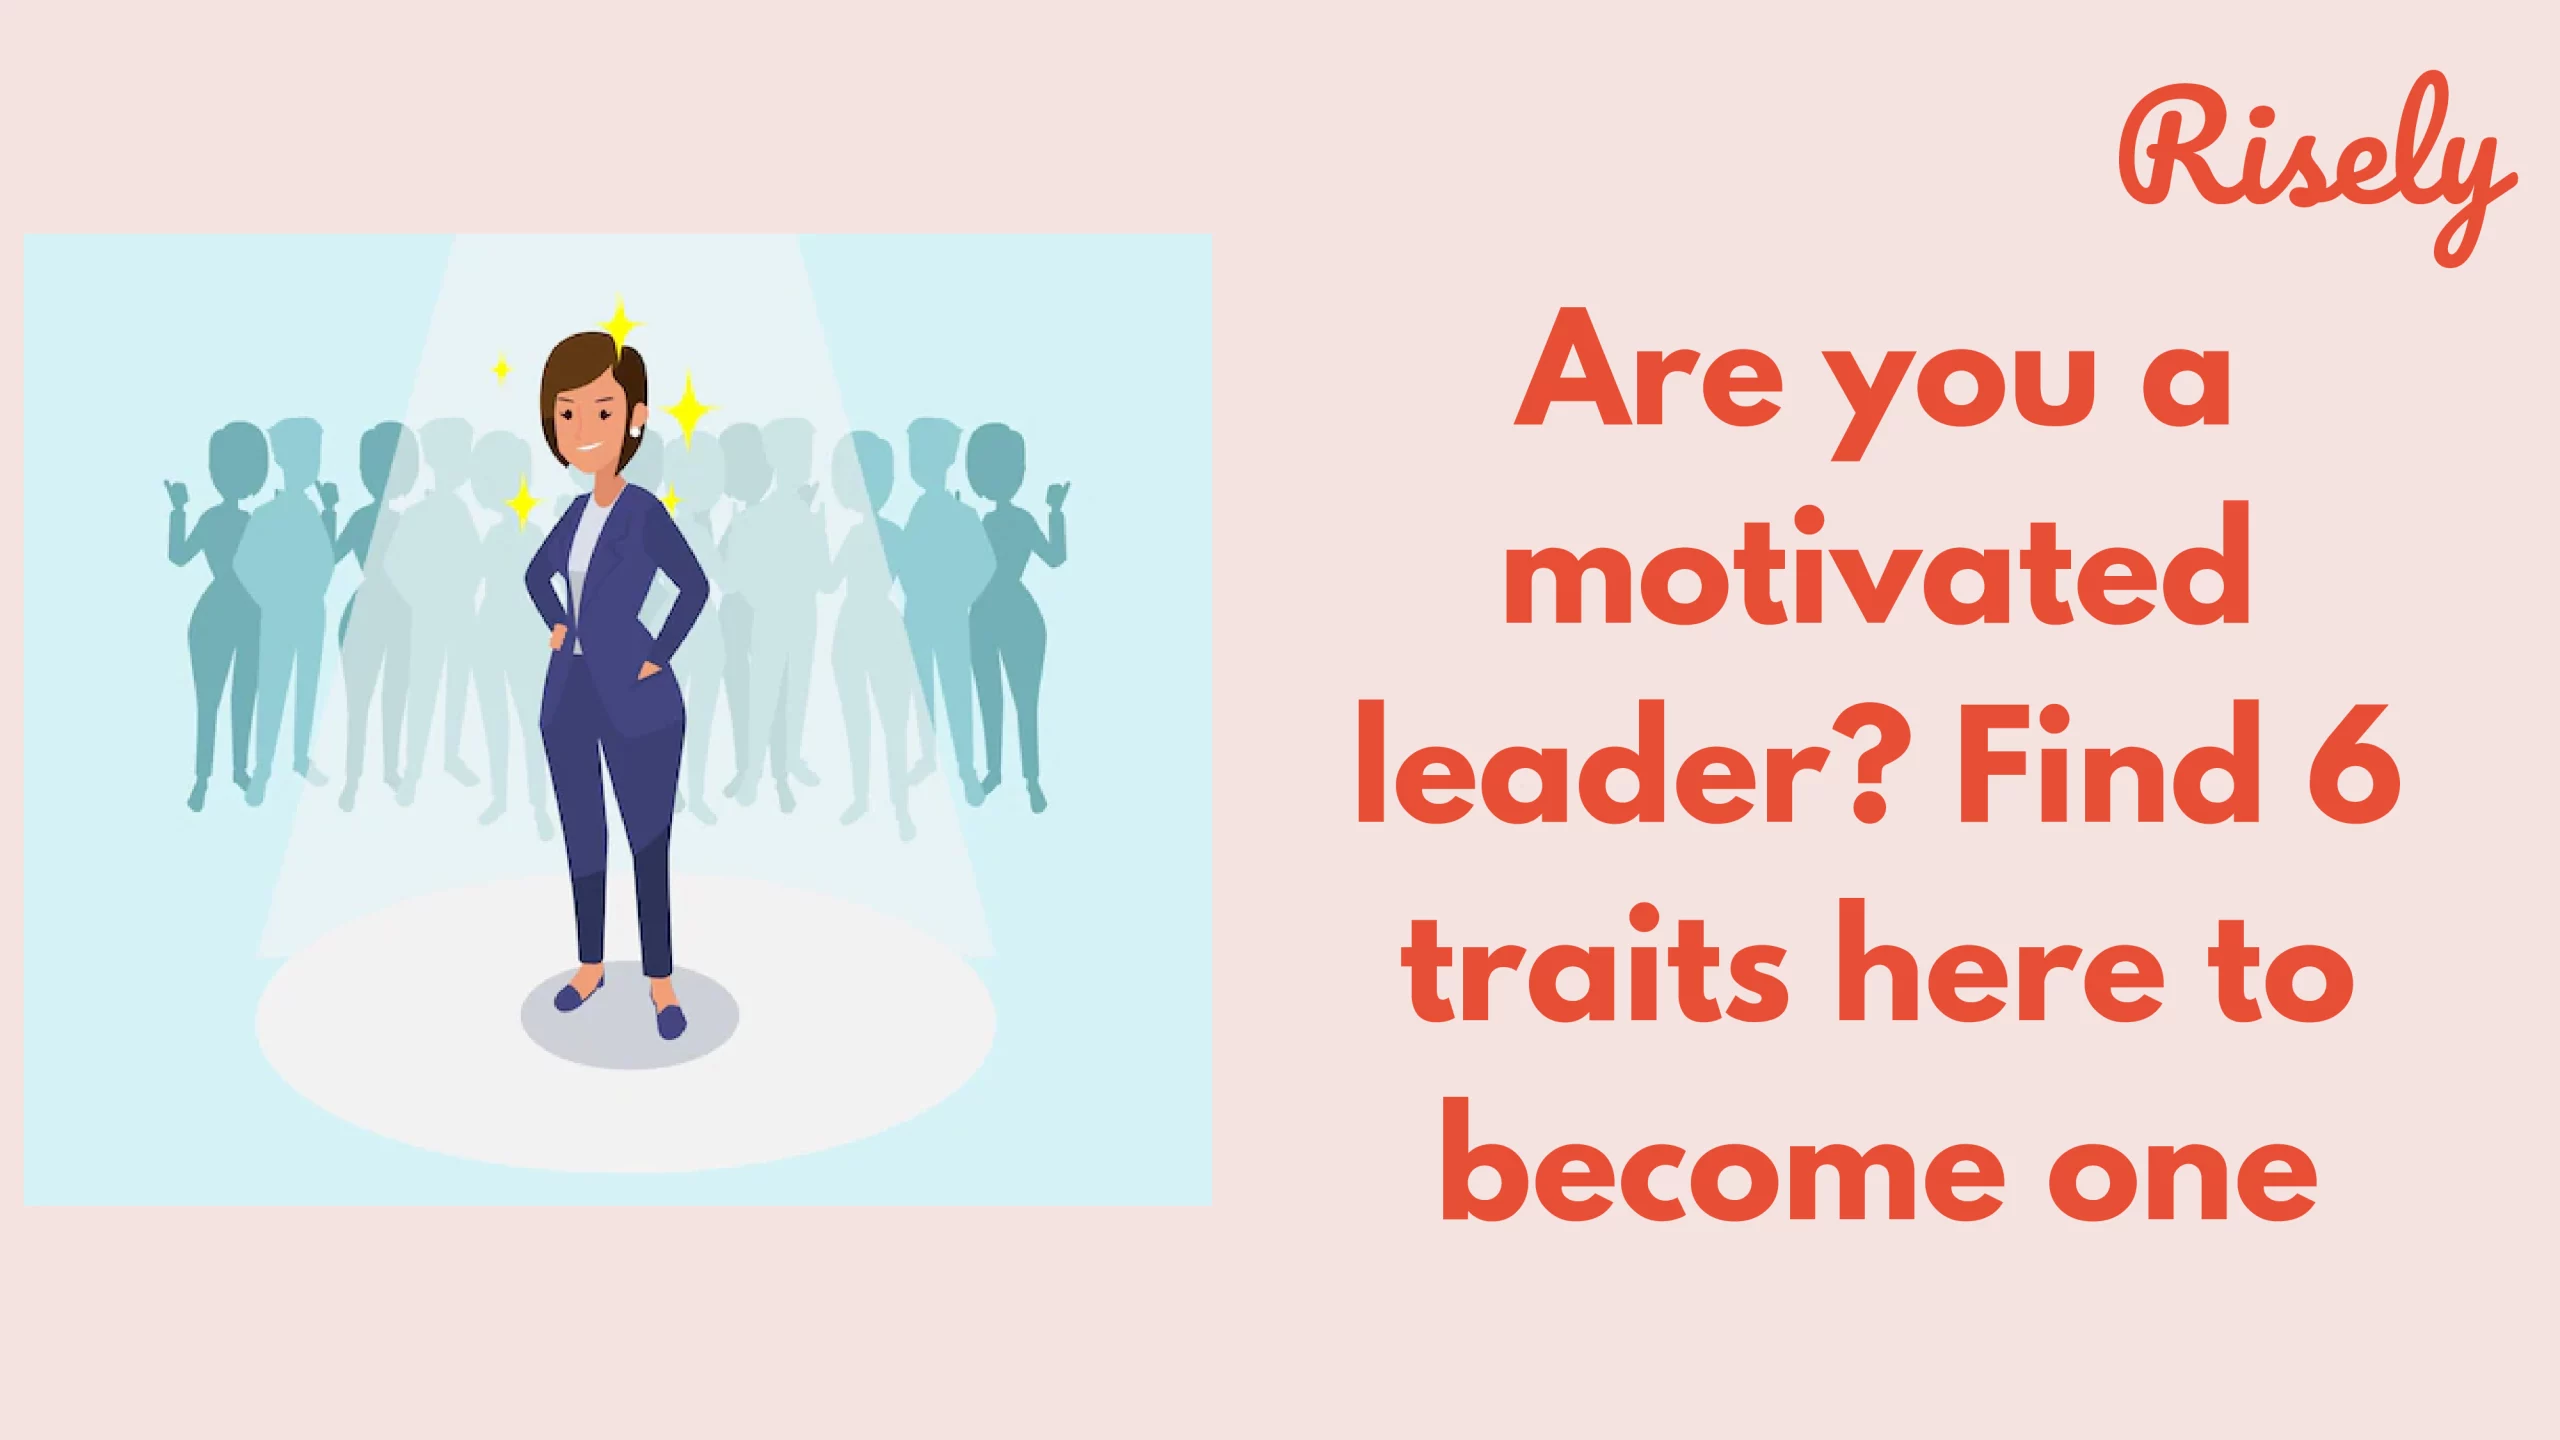 Motivated leader